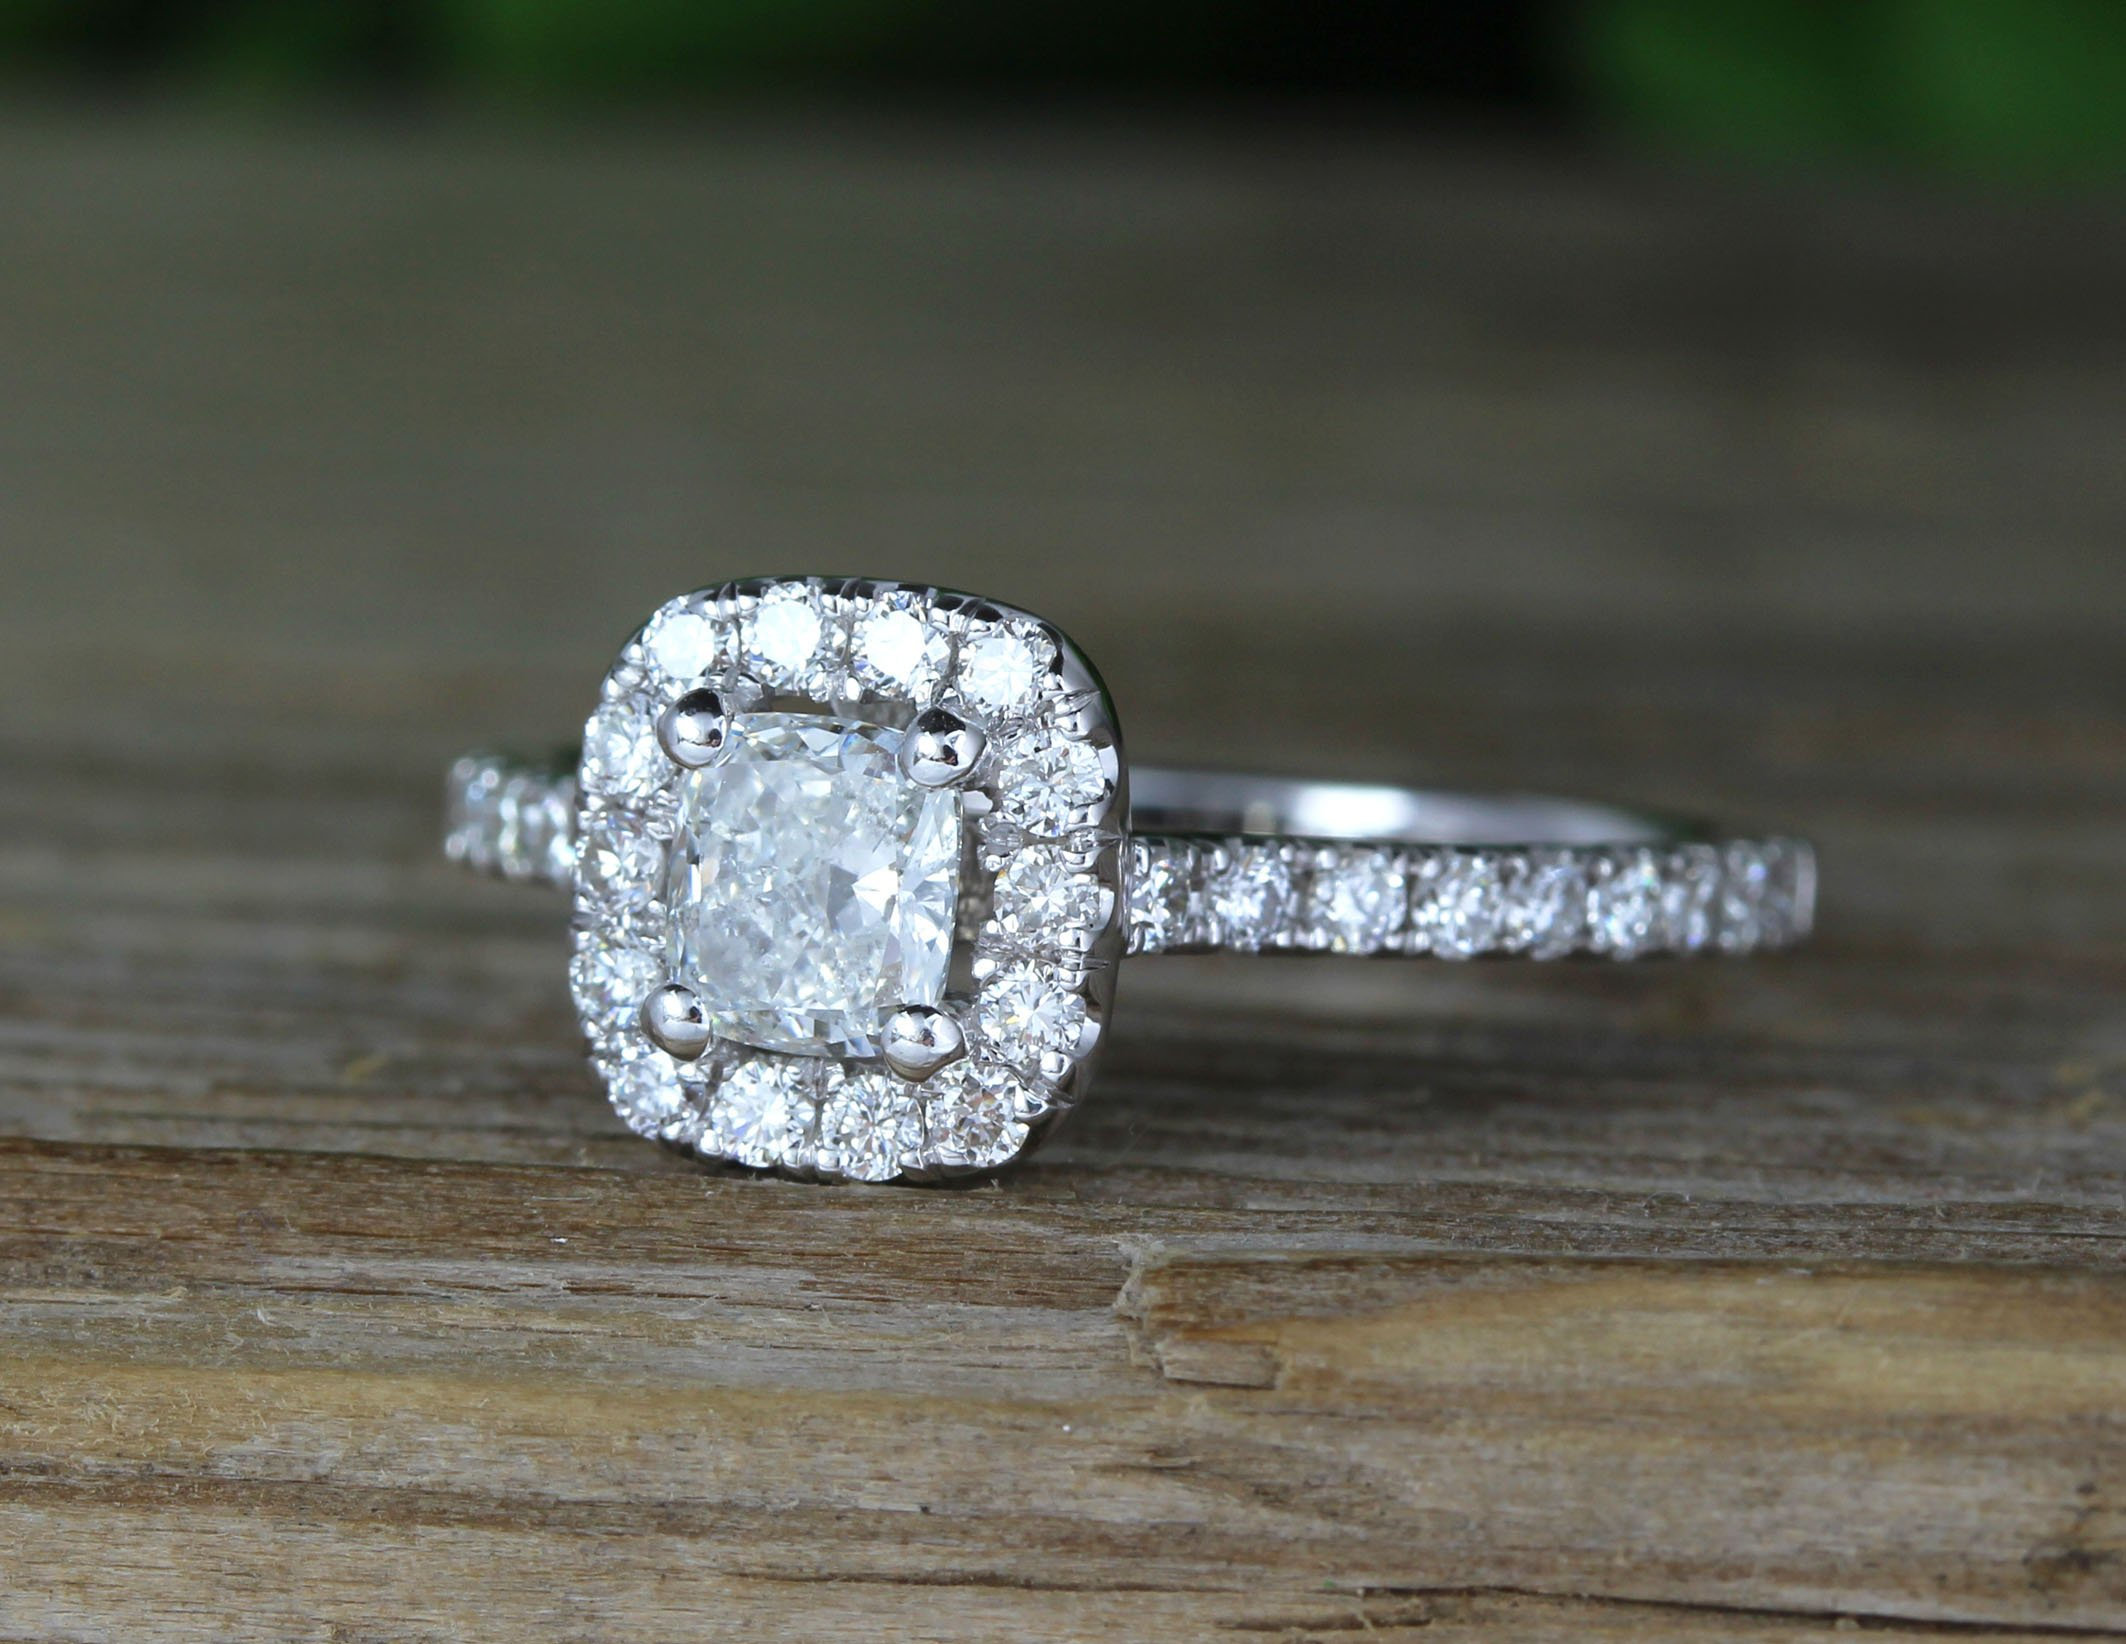 White Gold Cushion Cut Diamond Engagement Ring Antique Vintage Art Deco Engagement Ring 5c348871 